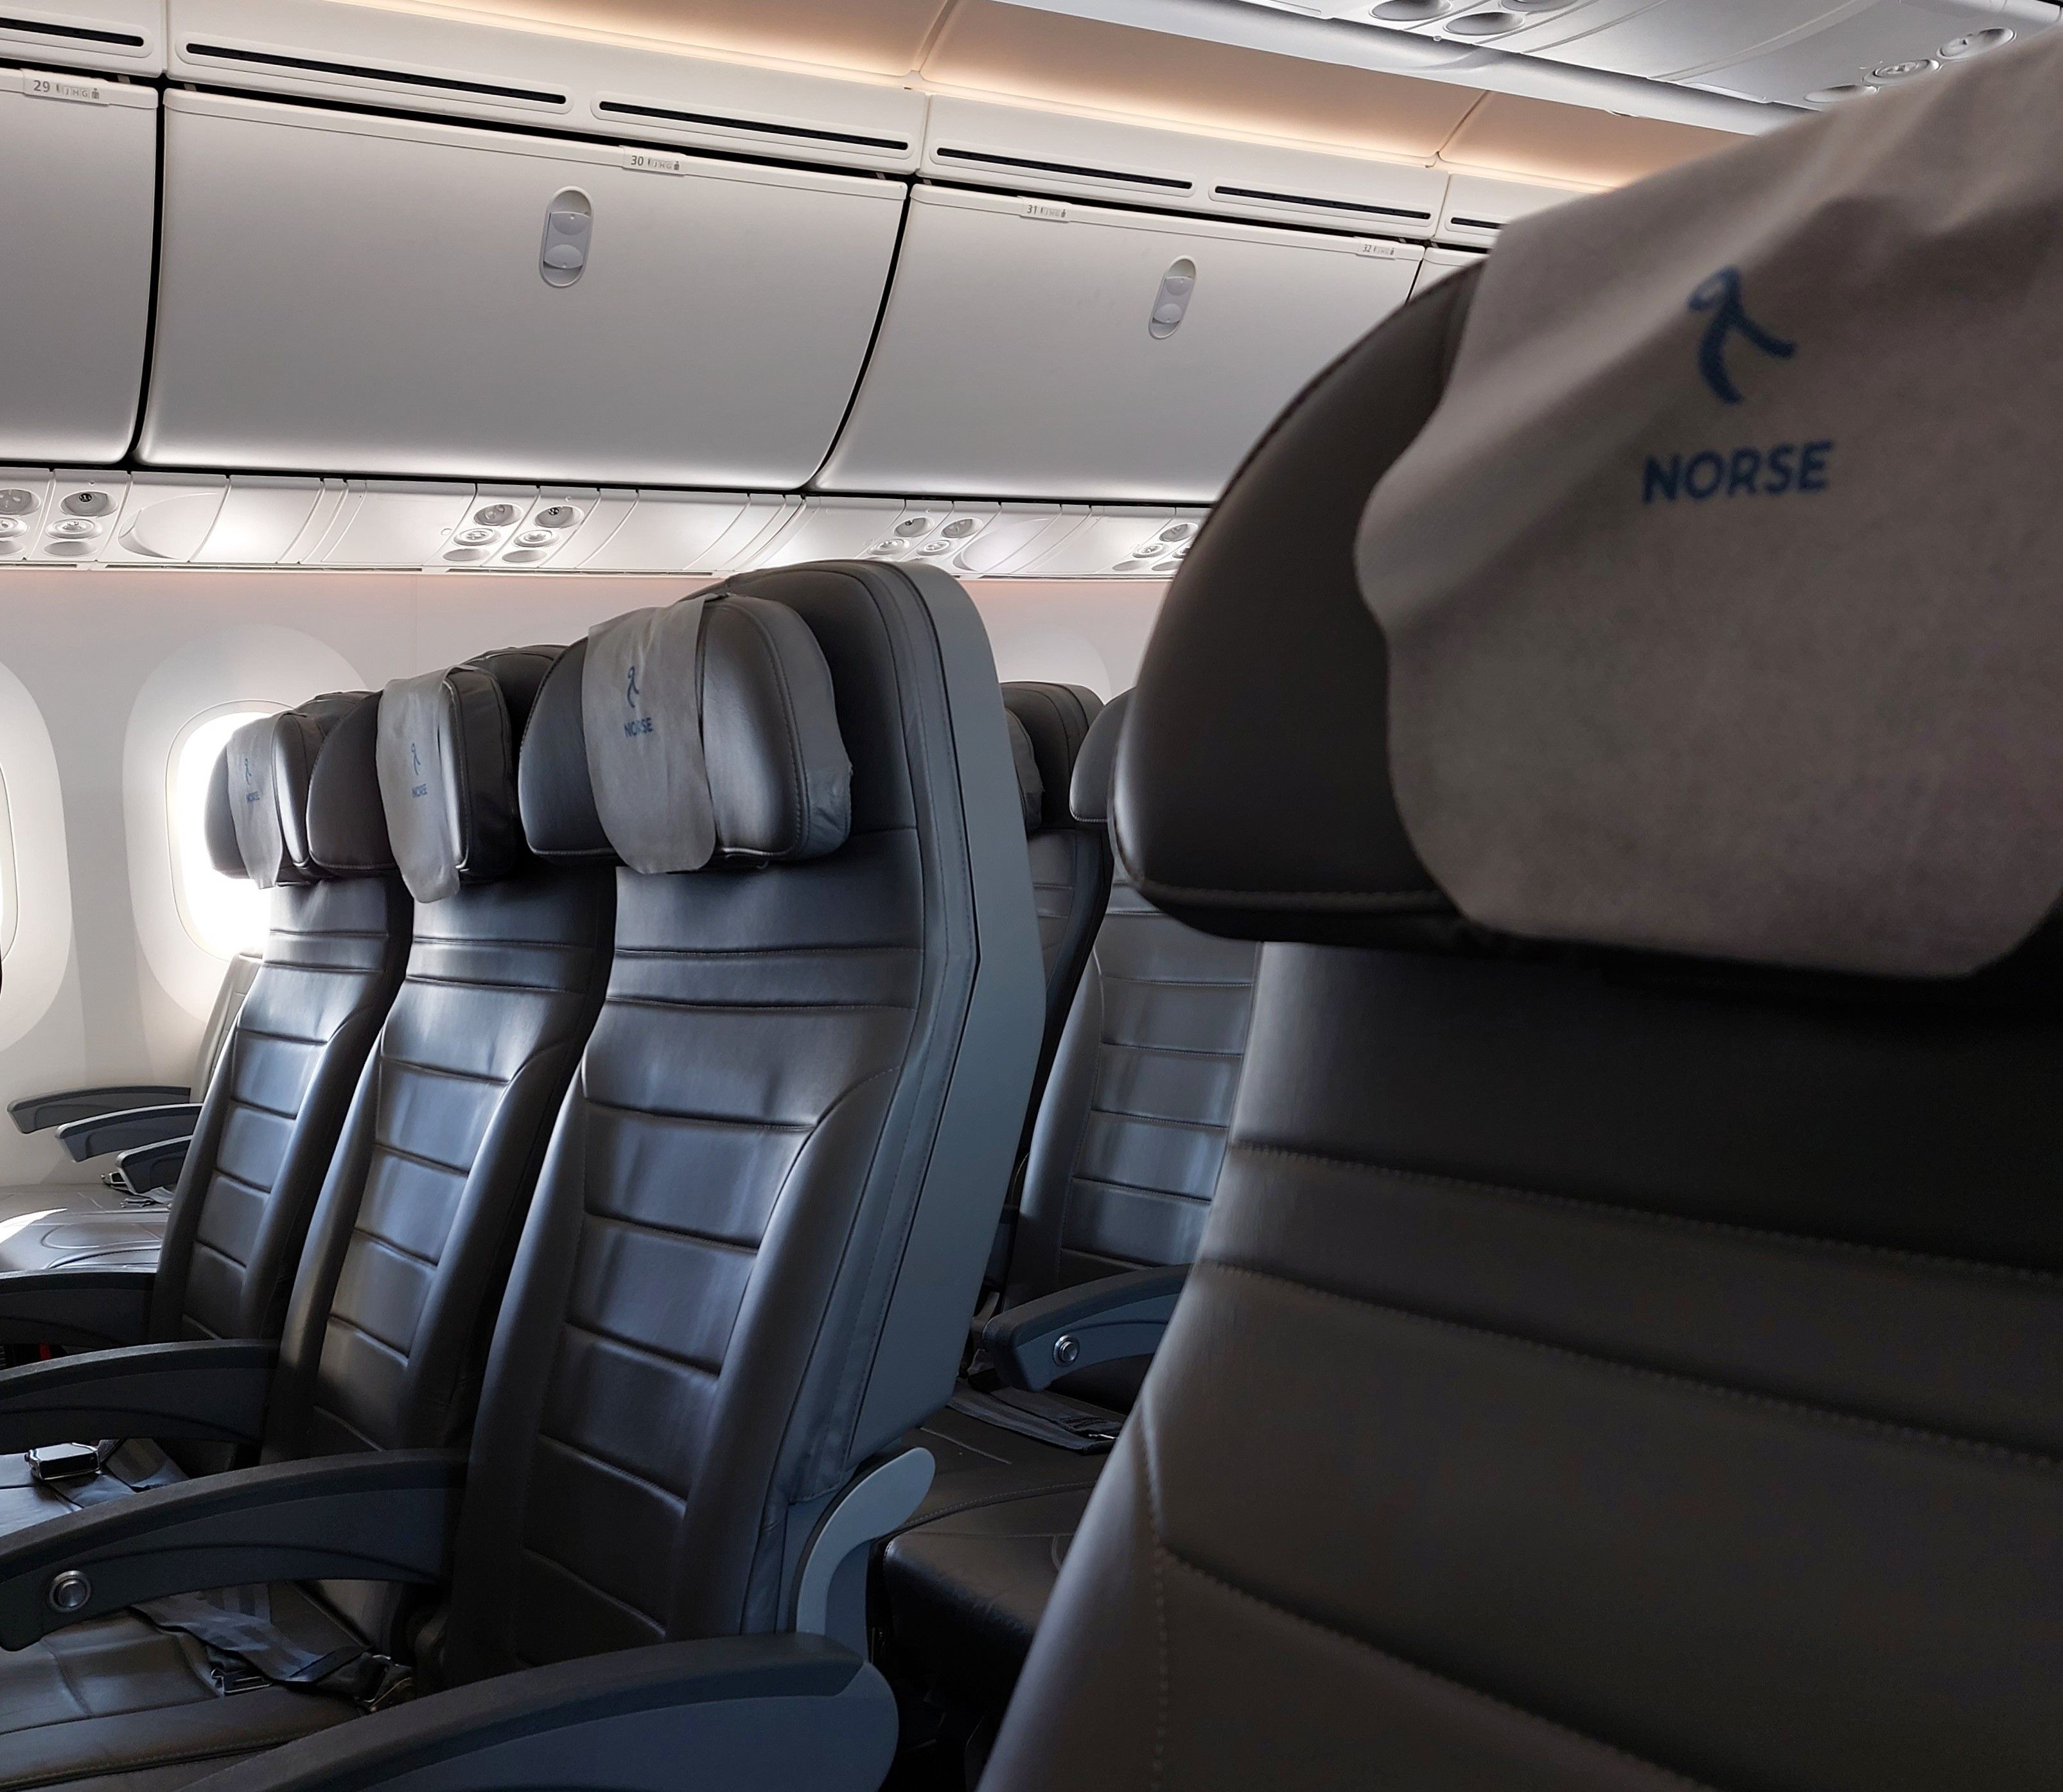 Norse Atlantic Airways Boeing 787 Economy Class Seating